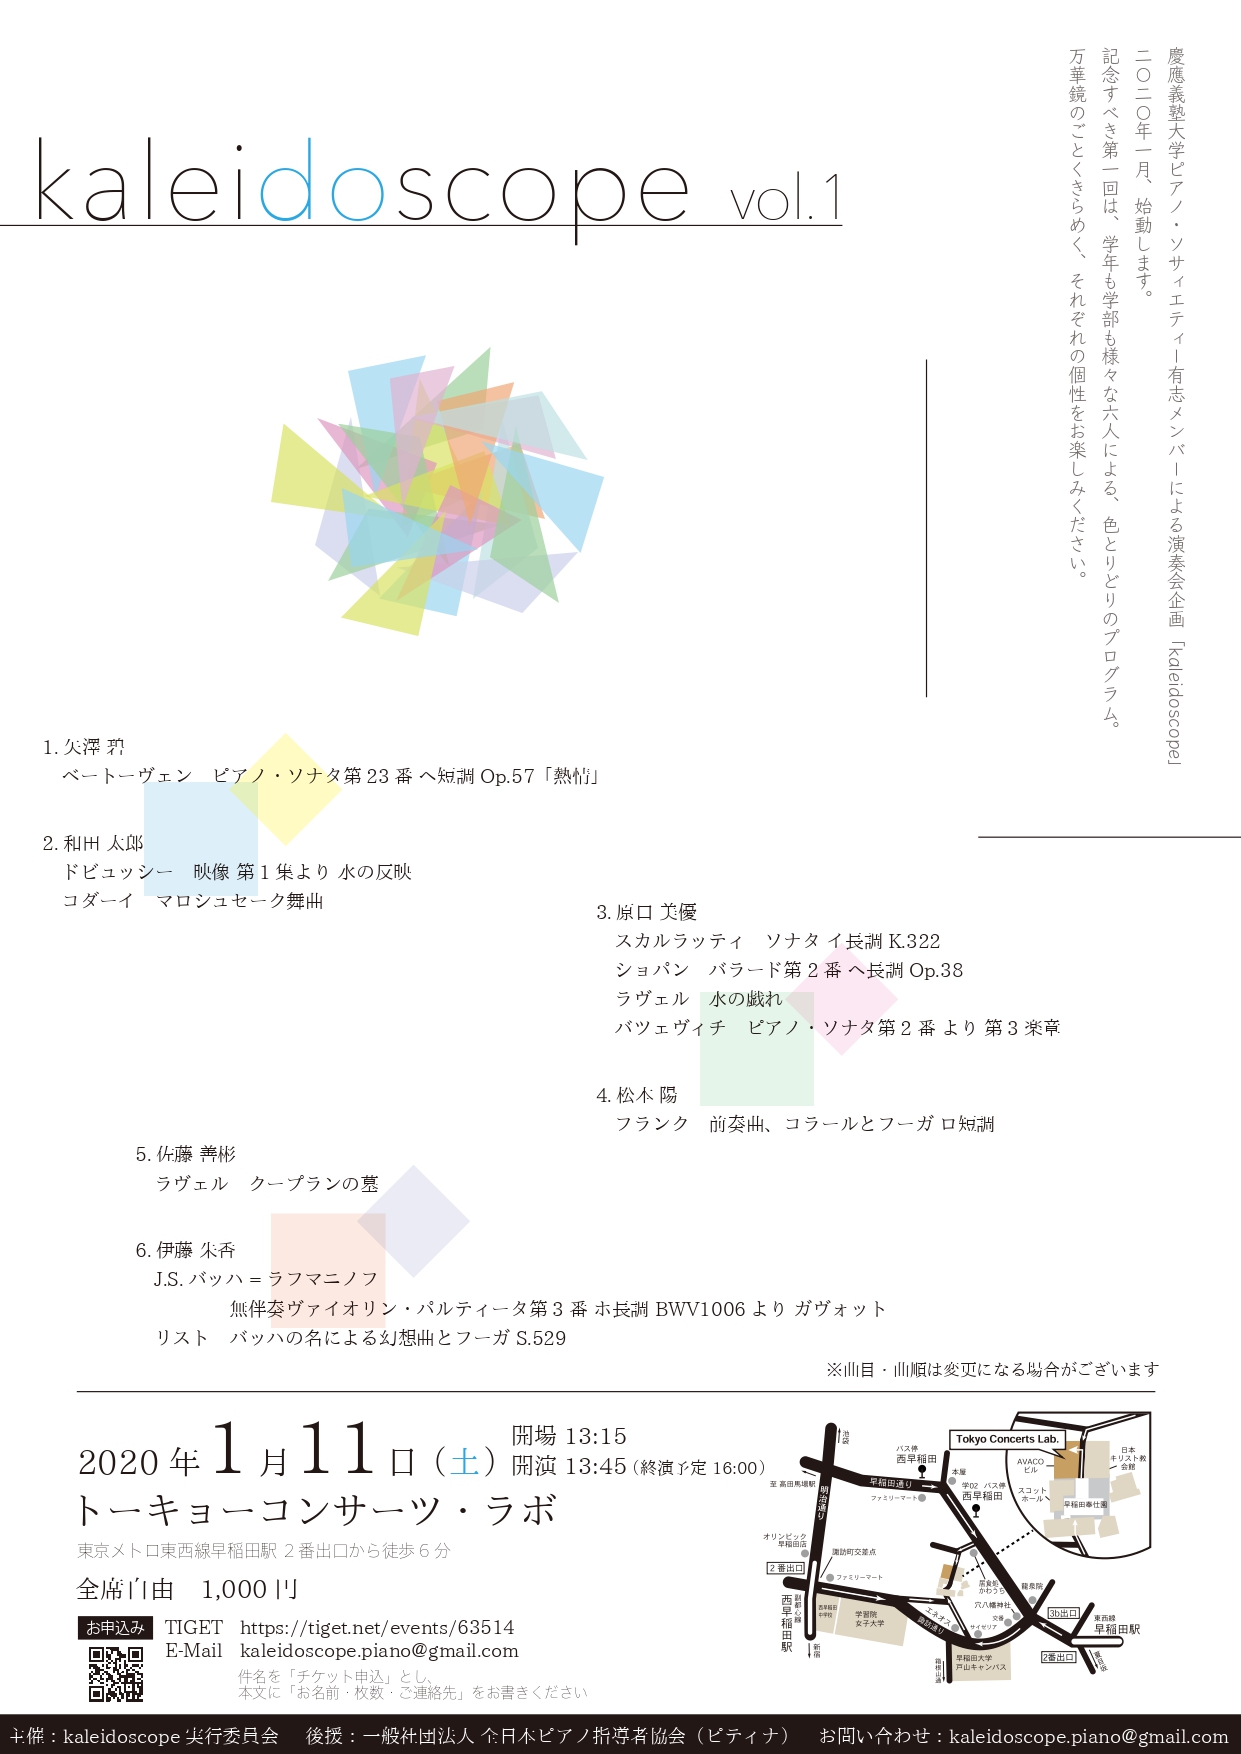 Kaleidoscope Vol 1 Tokyo Concerts Lab